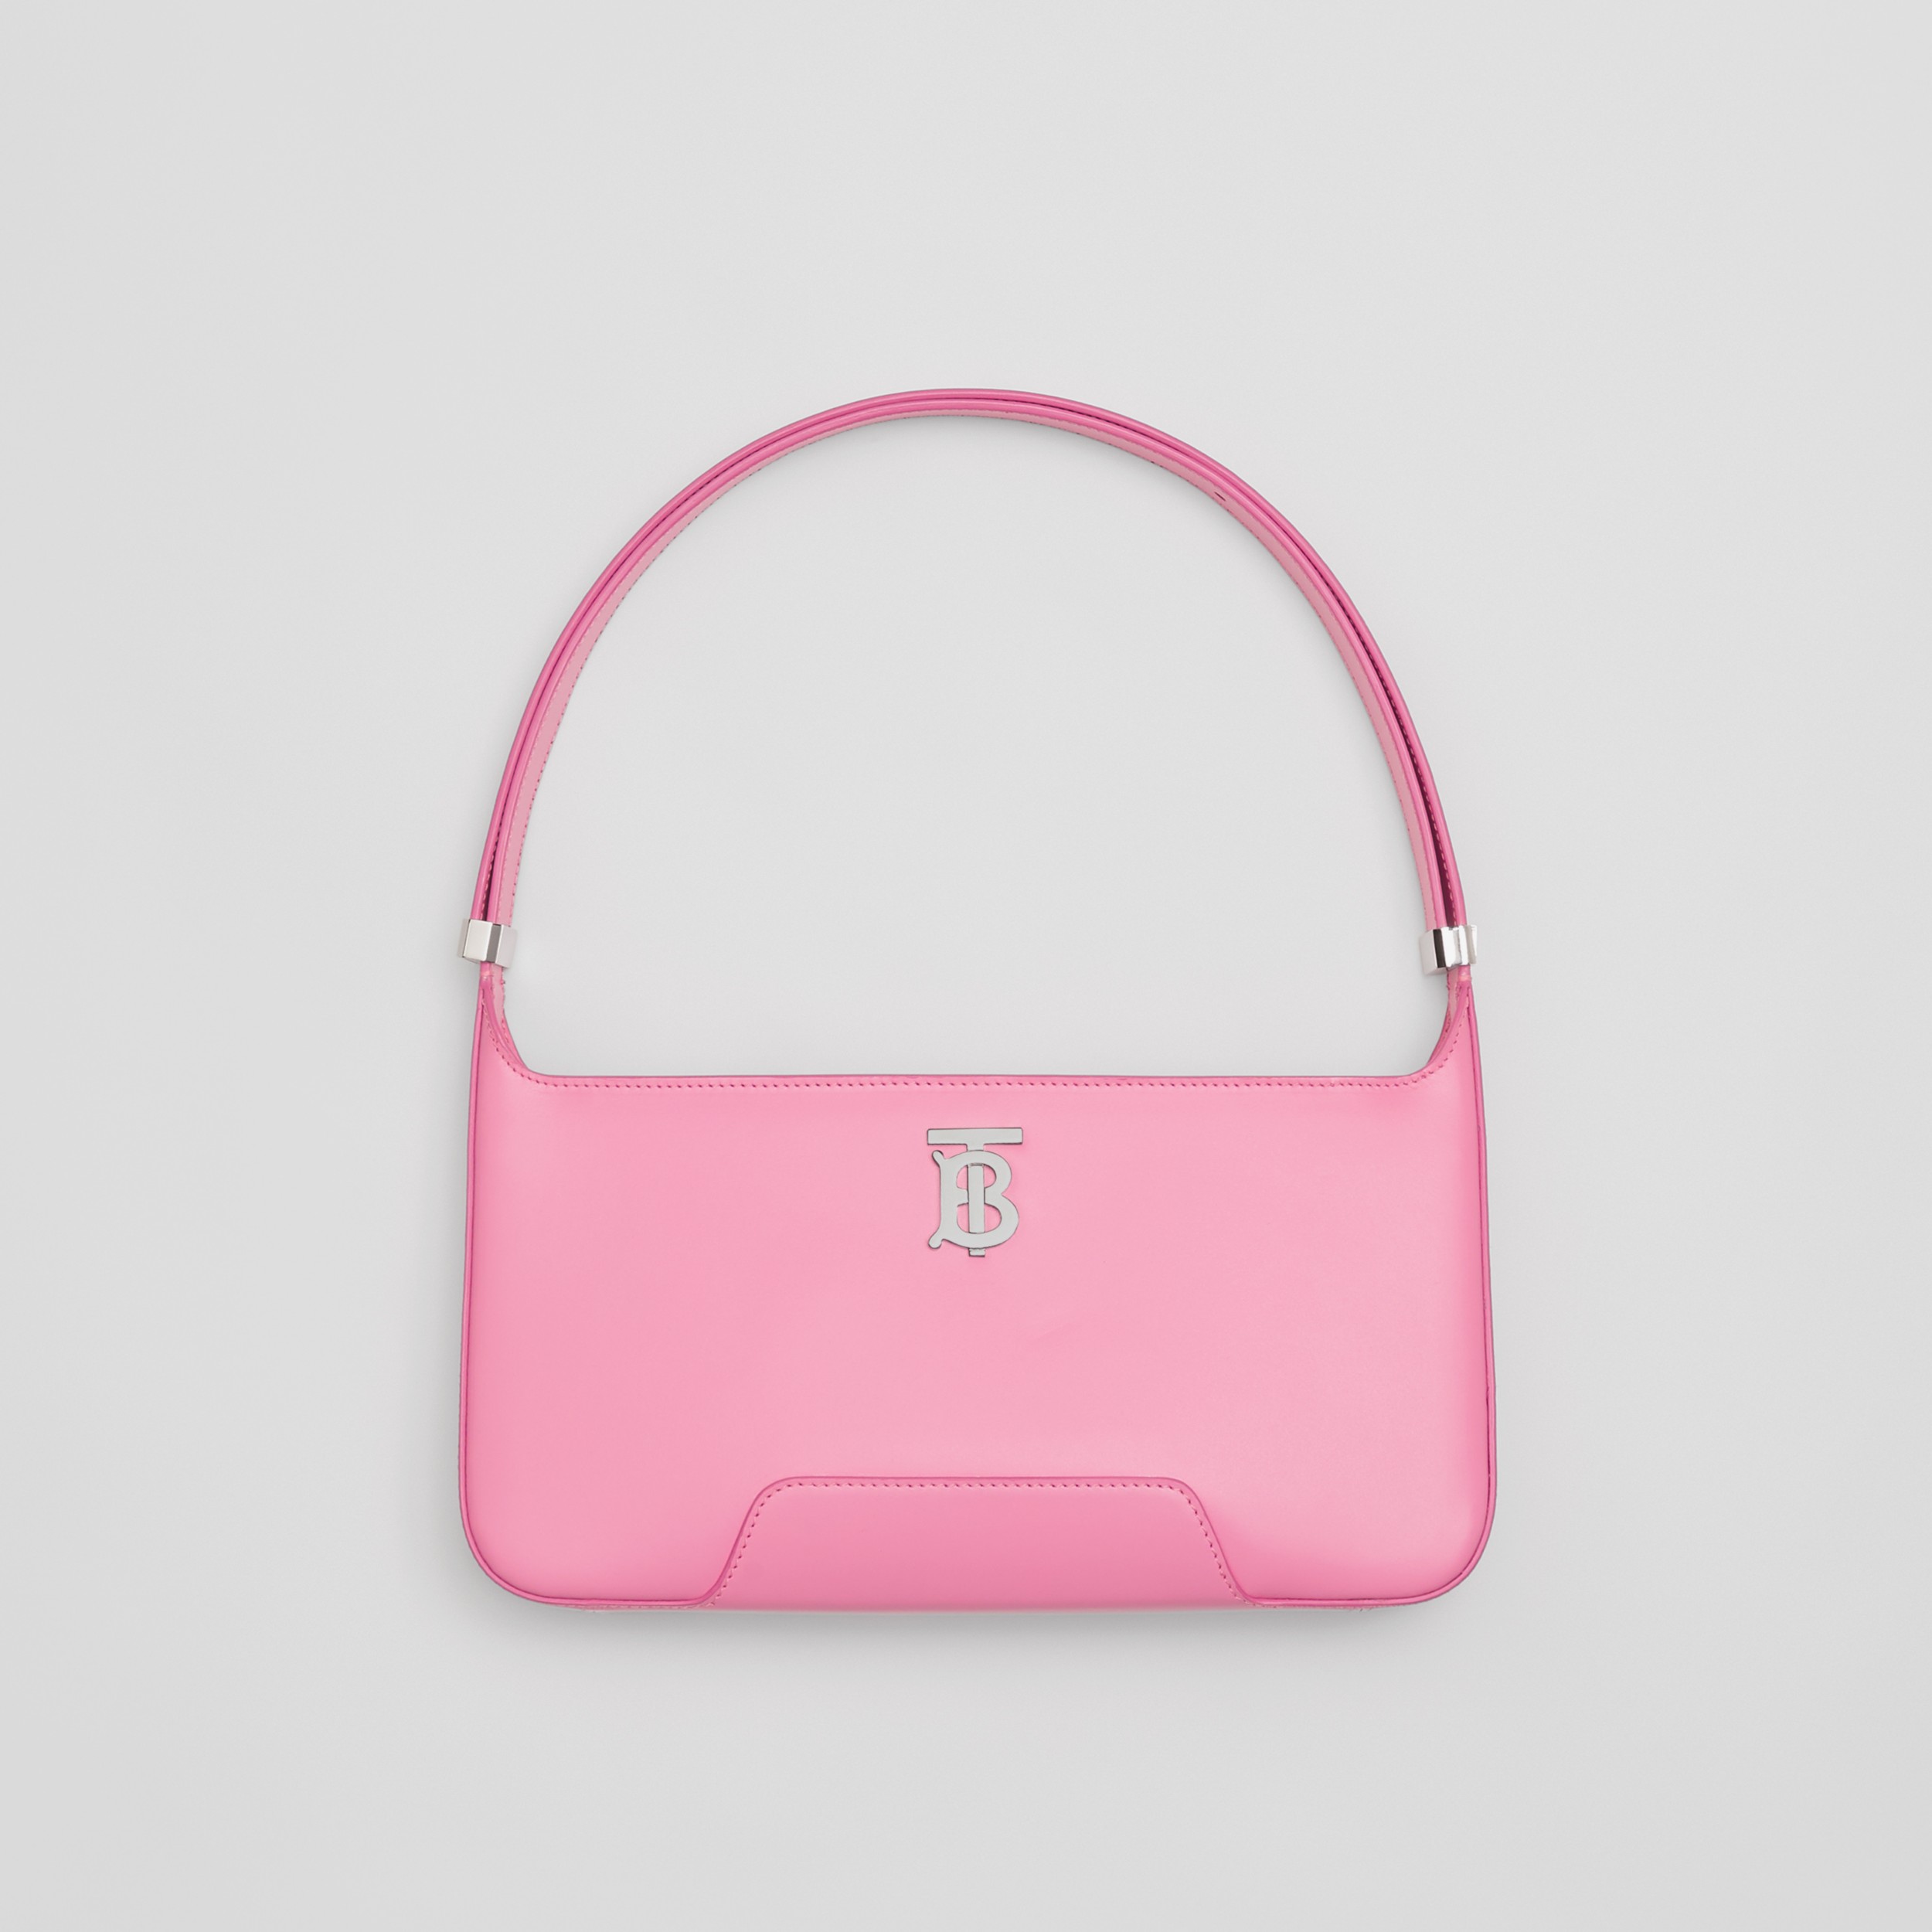 Balenciaga Pink Bag Price Cheapest Prices, Save 70% 